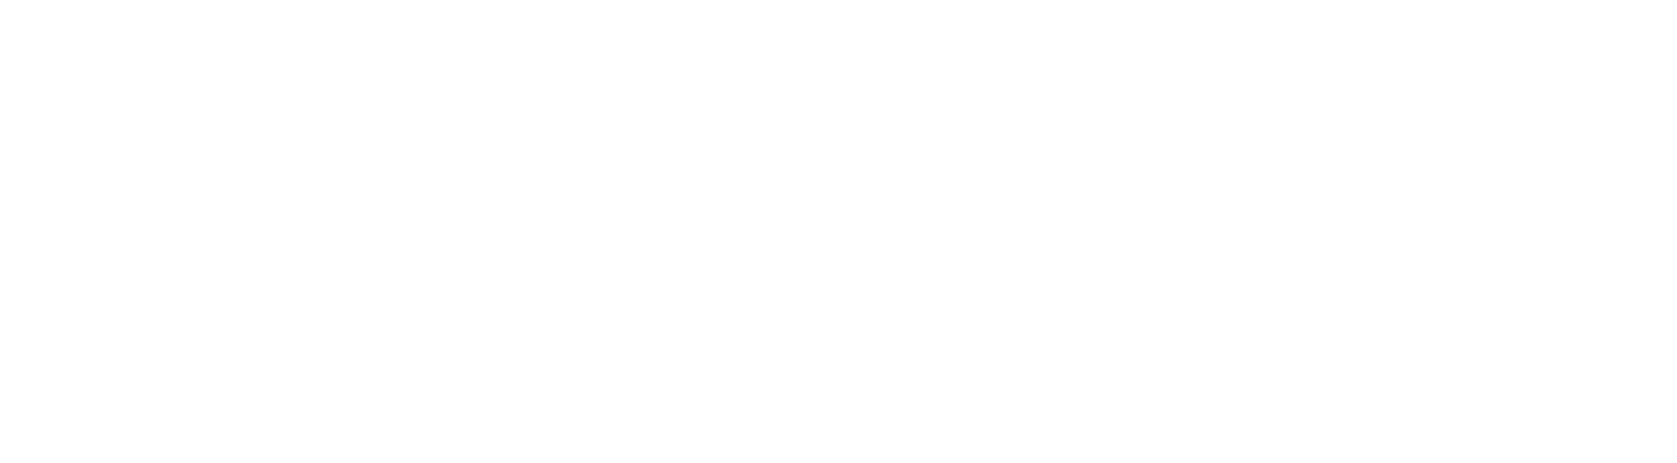 Dr. Wade Darr